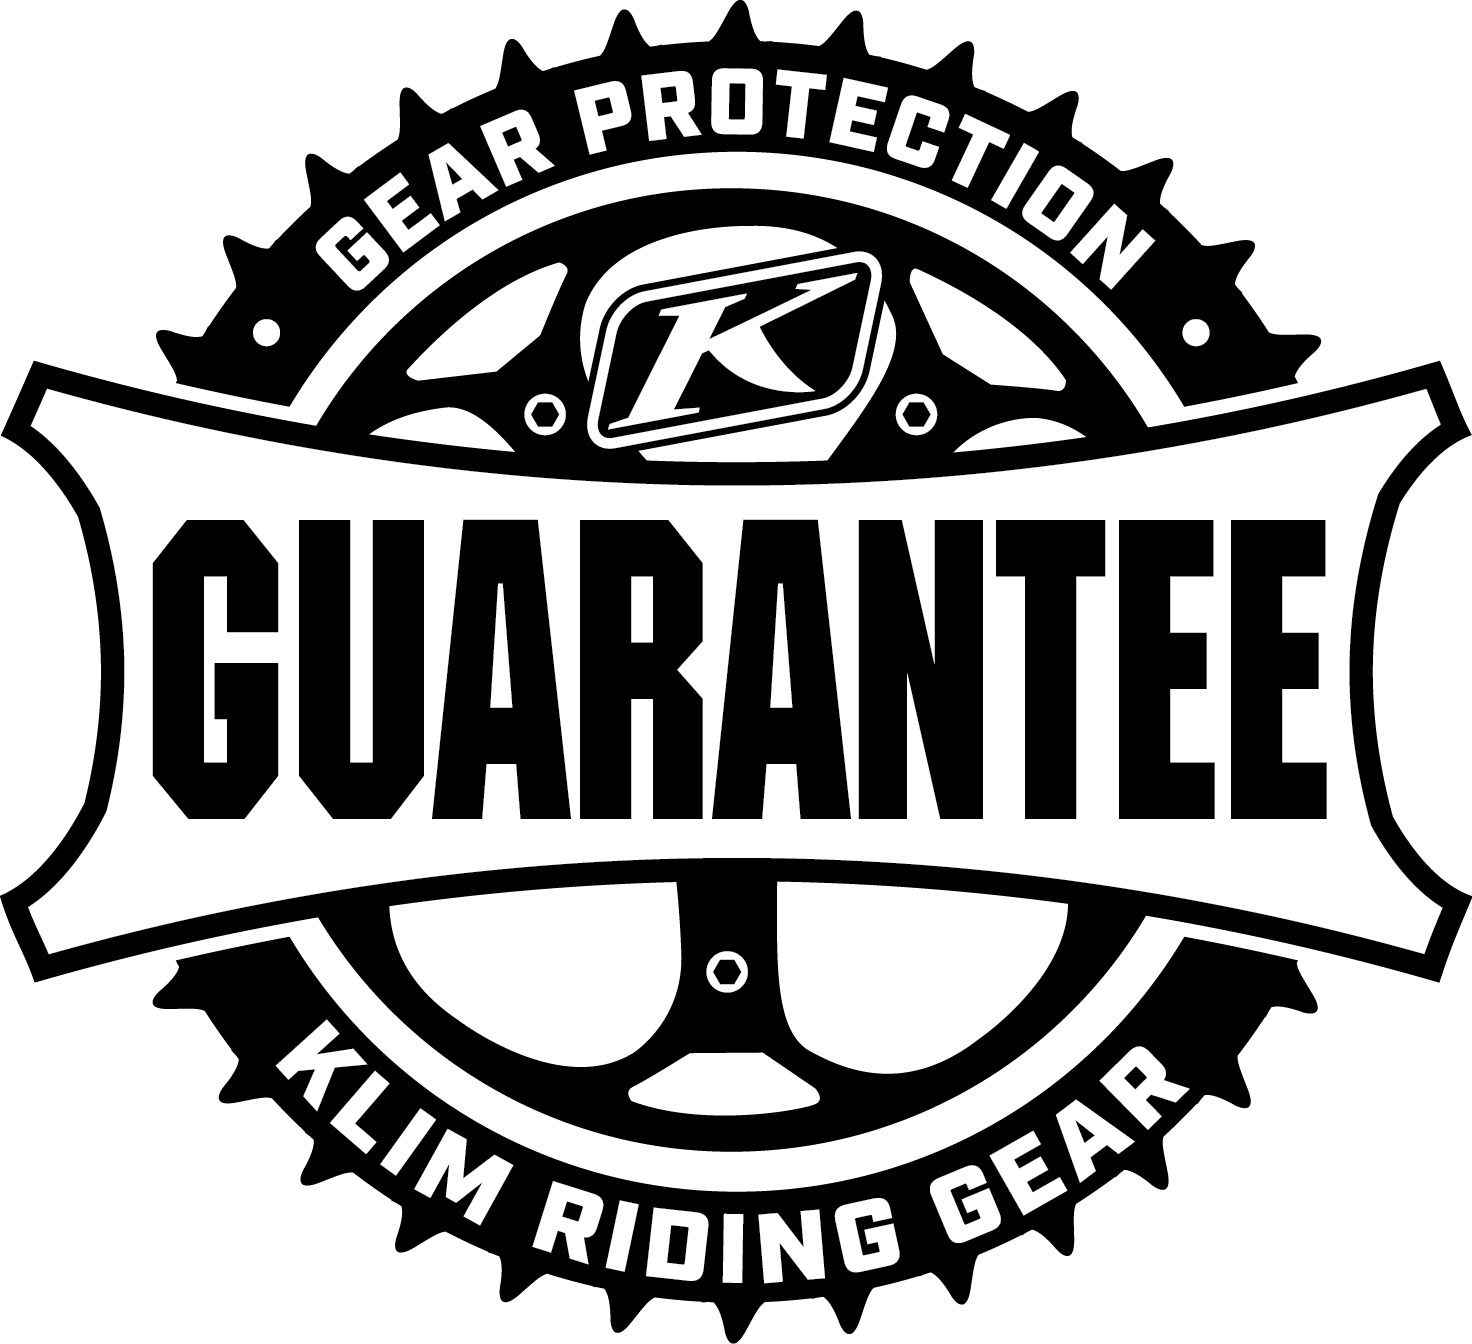 KLIM Motorradbekleidung: Full Protection!